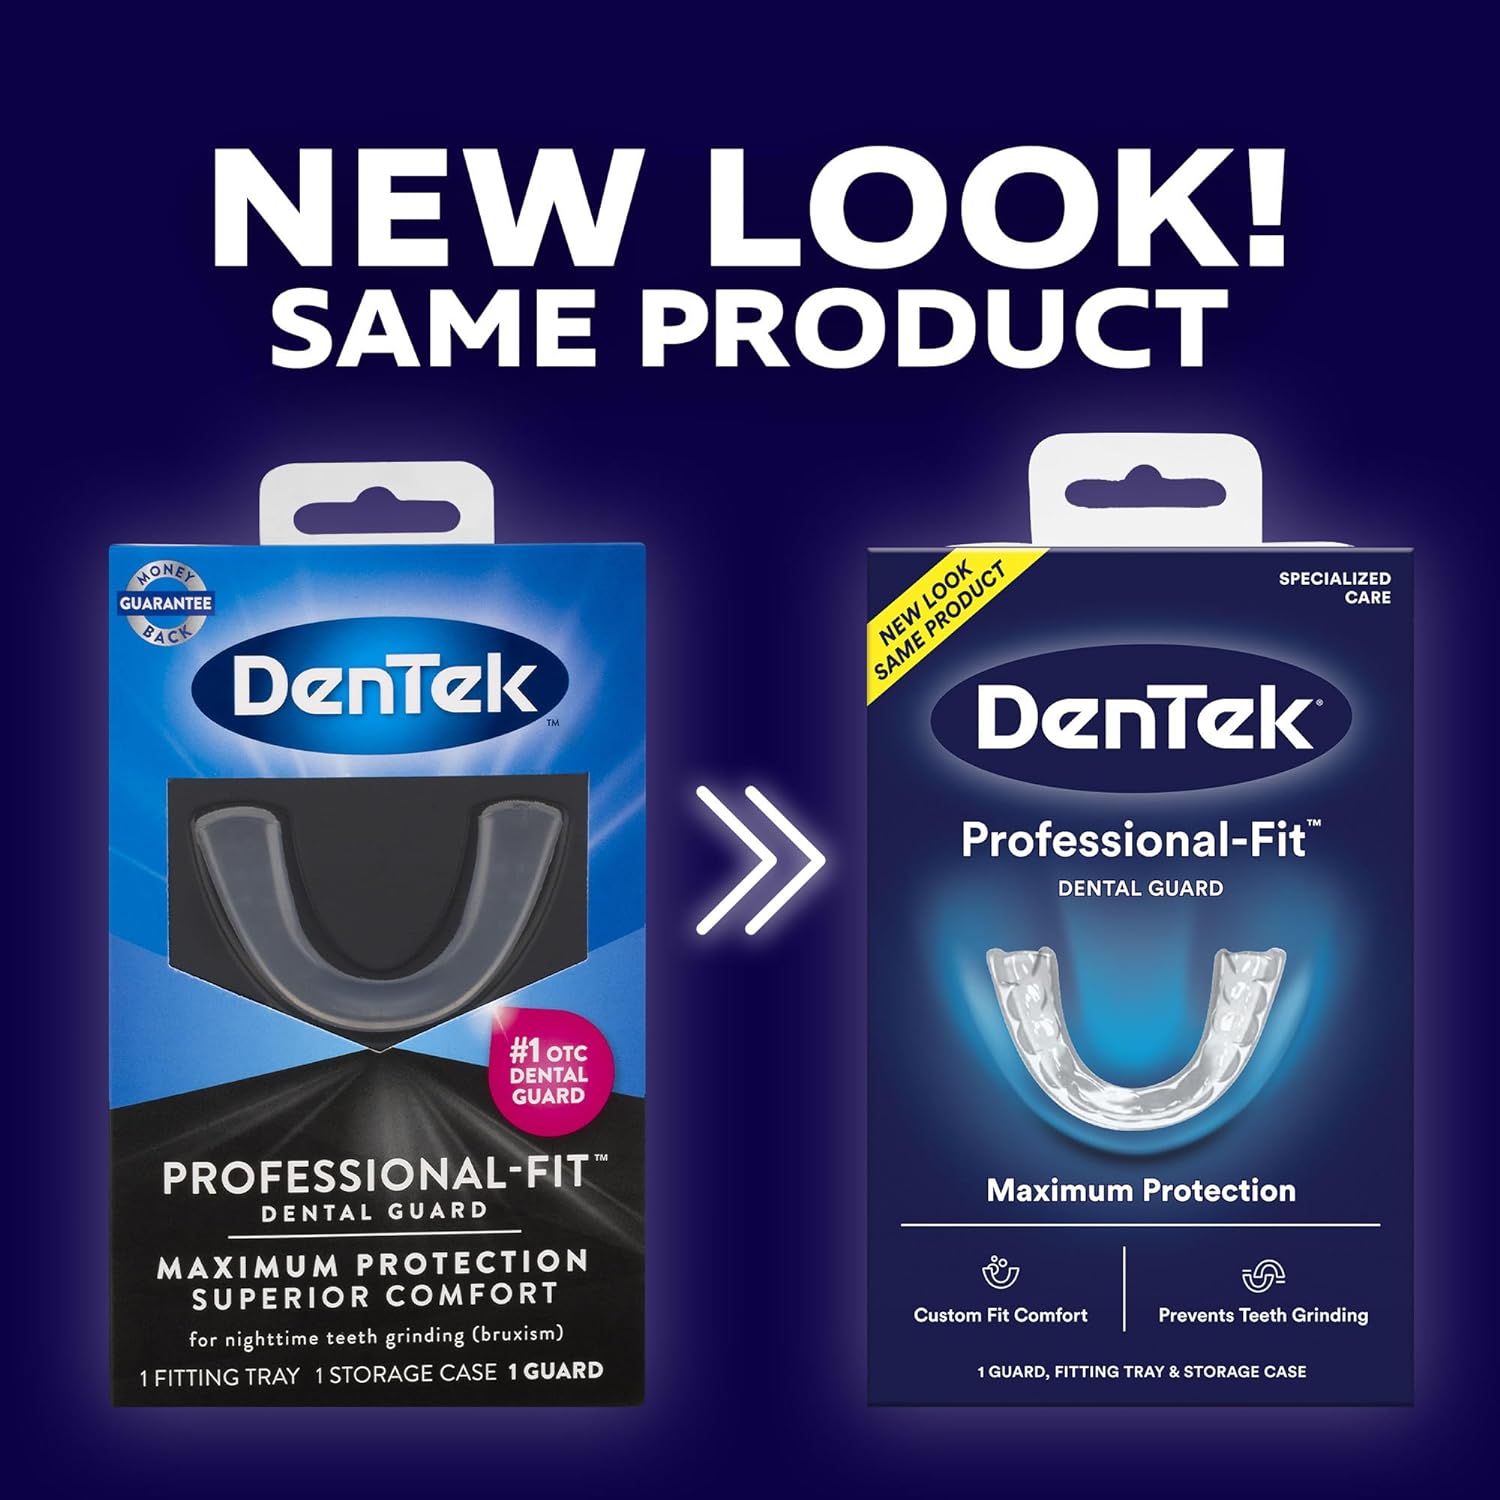 DenTek Mouth Guard for Nighttime Teeth Grinding, Professional-Fit Dental Guard